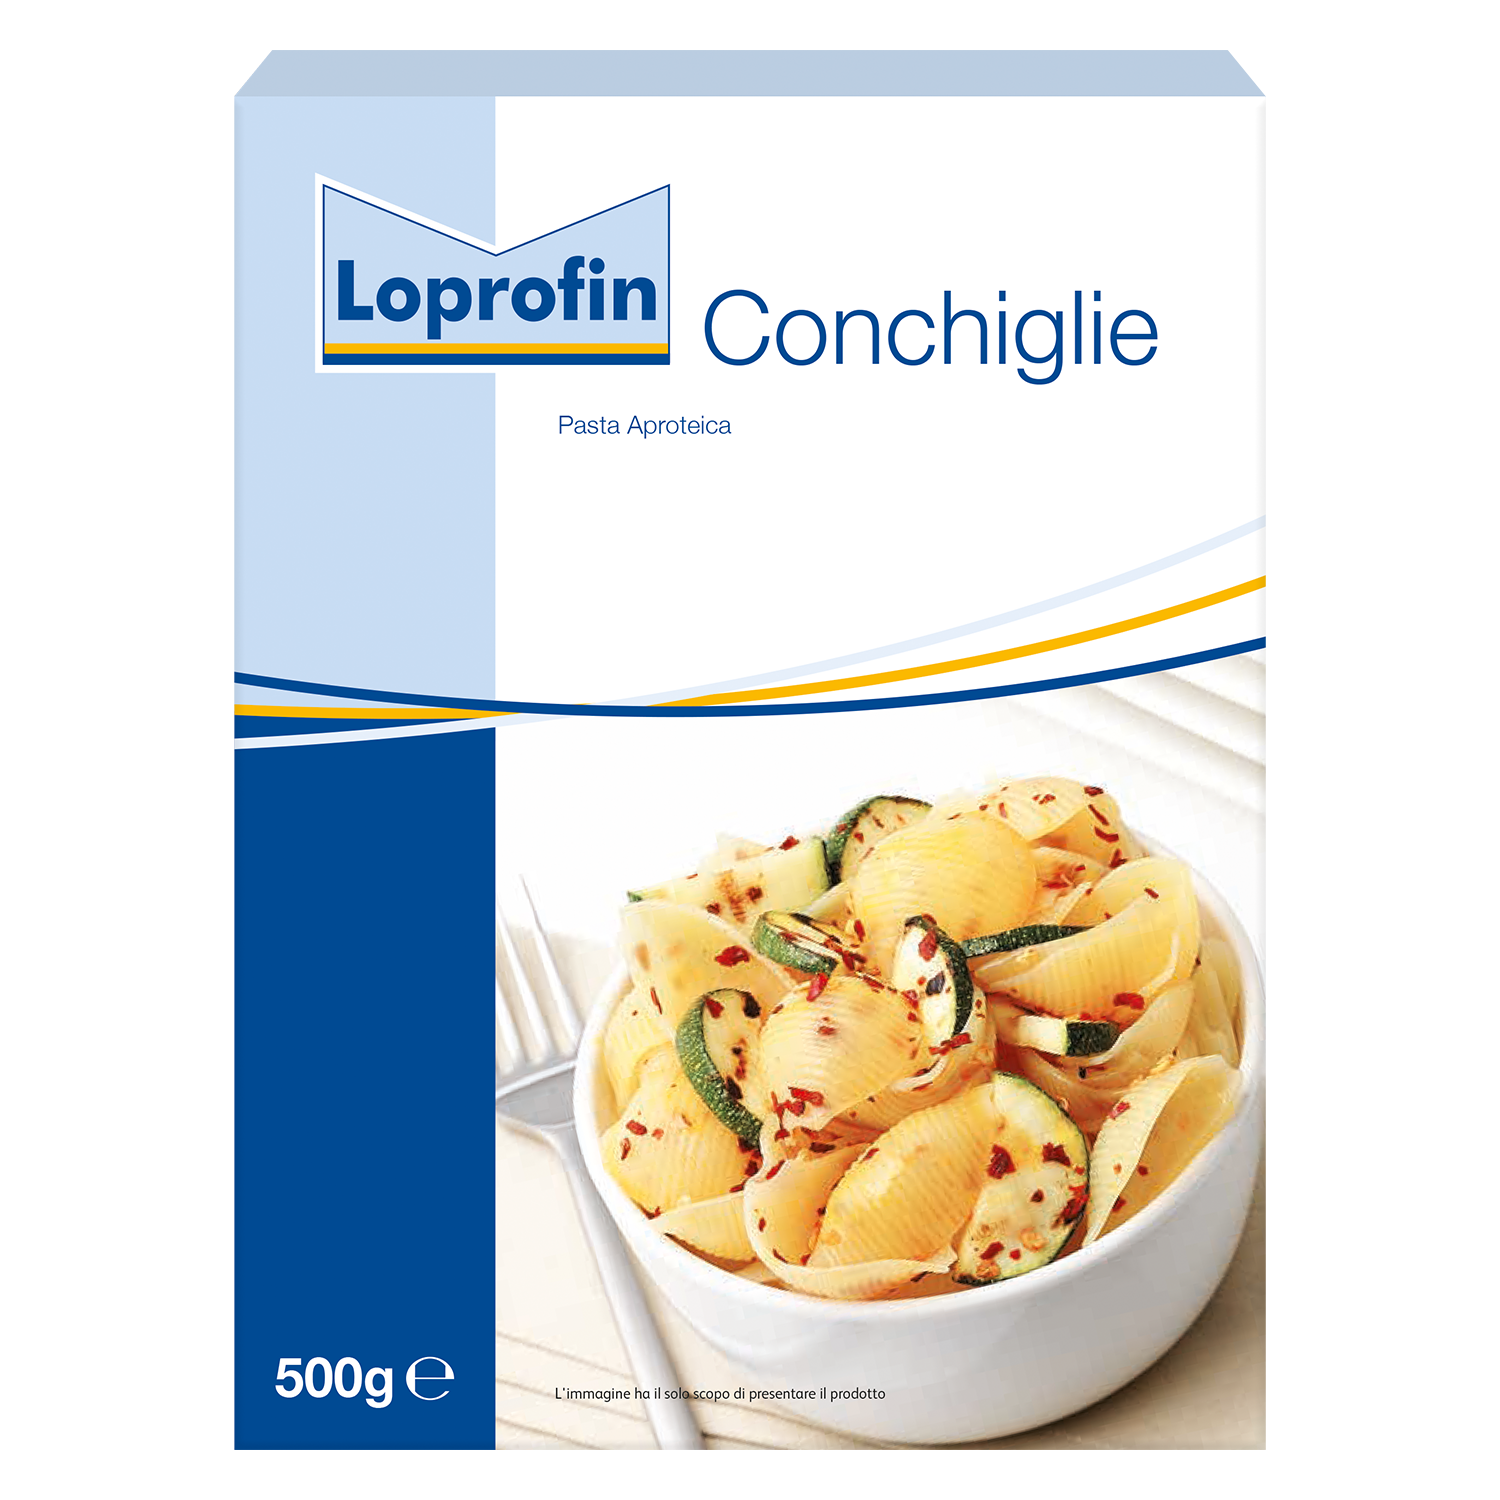 Loprofin Conchiglie (500g)